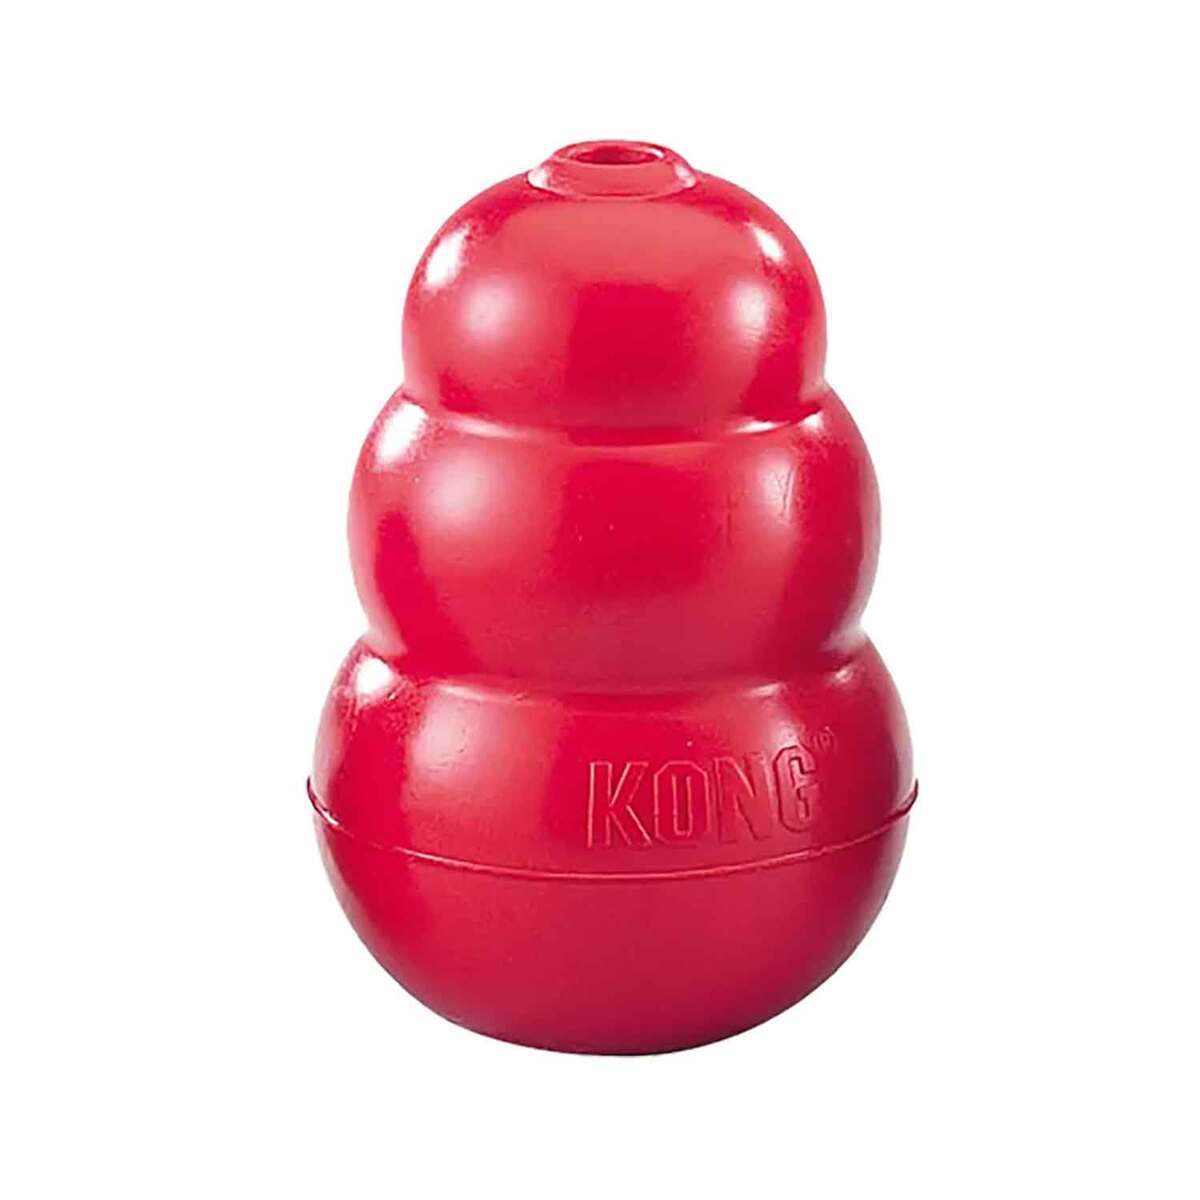 https://www.sportsmans.com/medias/kong-rubber-classic-kong-chew-toy-medium-1797382-1.jpg?context=bWFzdGVyfGltYWdlc3wzODE4NHxpbWFnZS9qcGVnfGhjNC9oN2UvMTExMTU4NTMxMTk1MTgvMTc5NzM4Mi0xX2Jhc2UtY29udmVyc2lvbkZvcm1hdF8xMjAwLWNvbnZlcnNpb25Gb3JtYXR8NjVmZGZlMTVkNTZlMWJlZjNhOGNkYmJkOTAyZGMyNjE0ODhiNjY1MDdjOWY1MzM3NmM0NTdhMWJjNzM2ZjBlNg